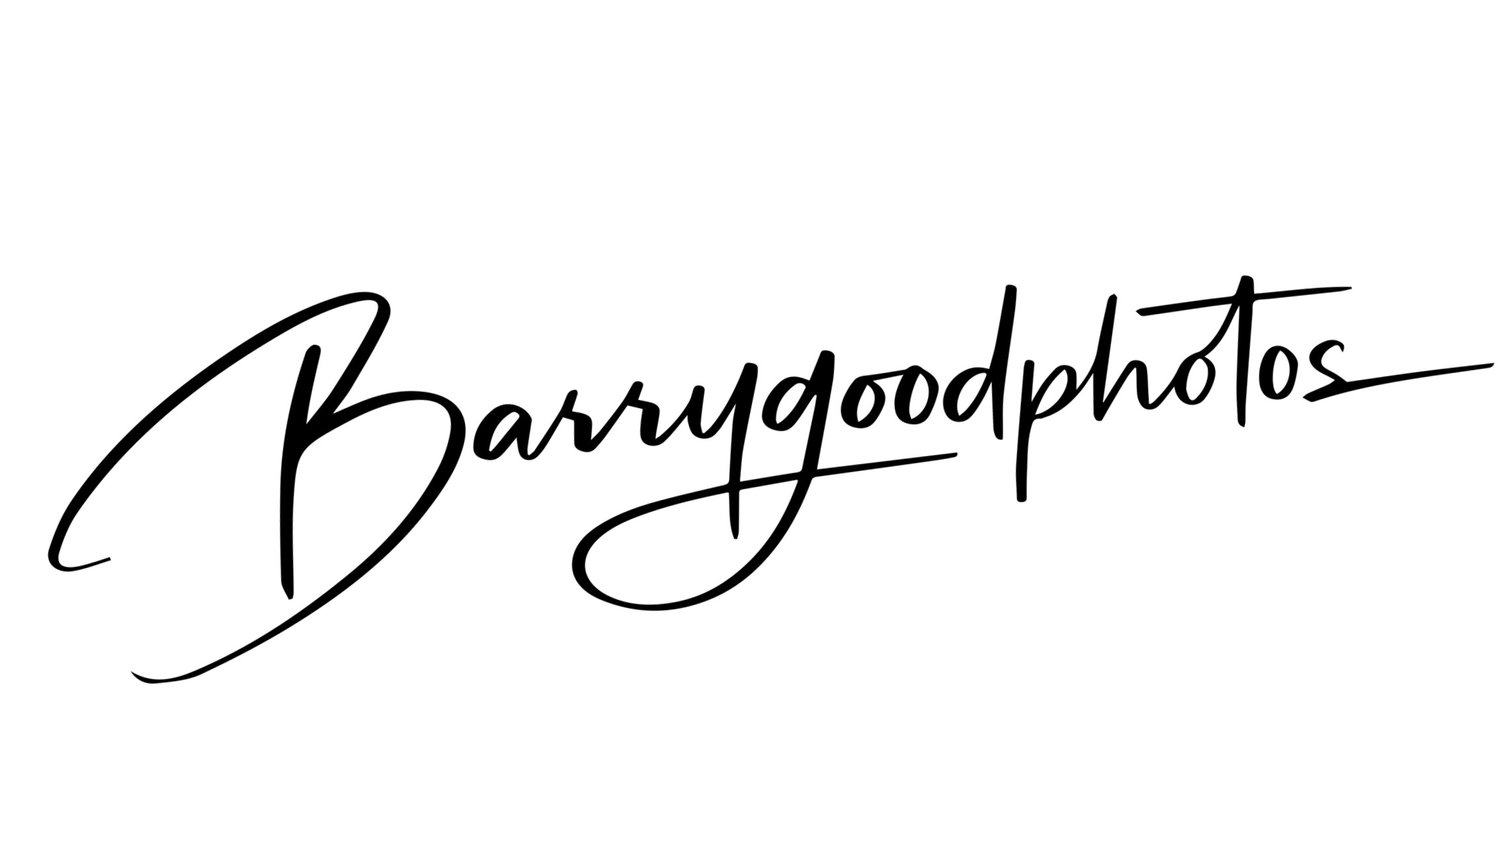 barrygoodphotos